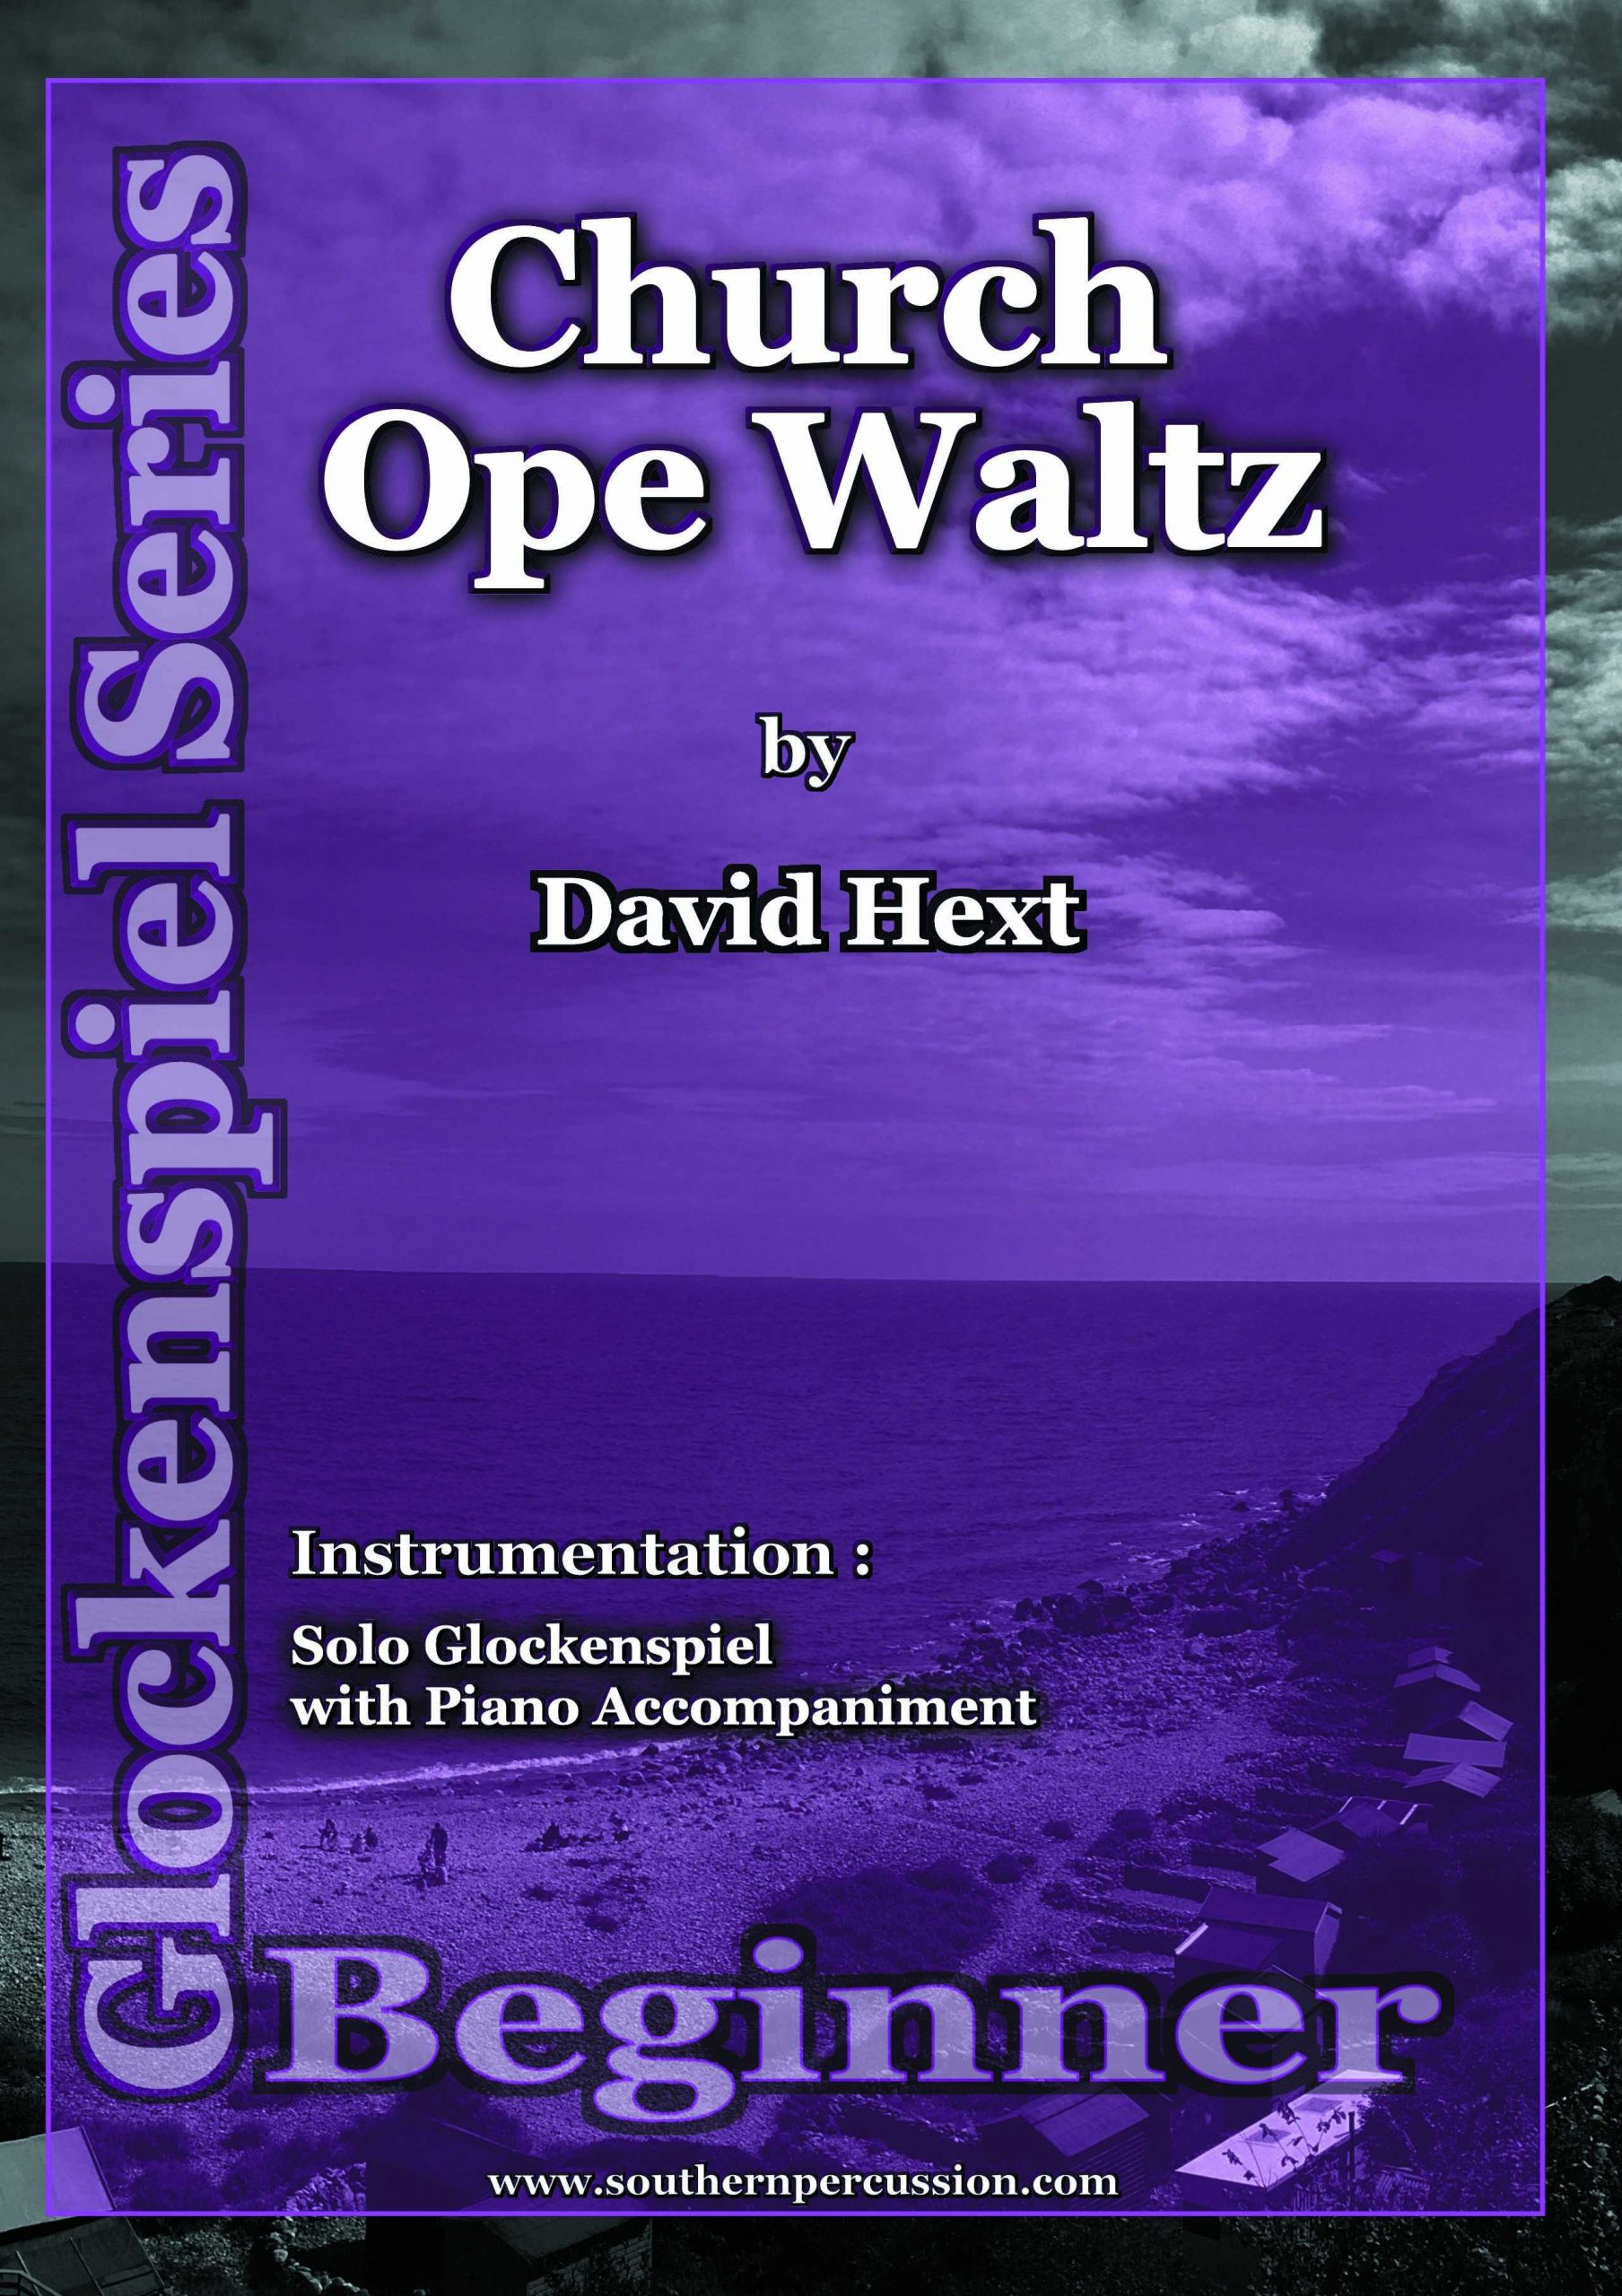 Church Ope Waltz by David Hext